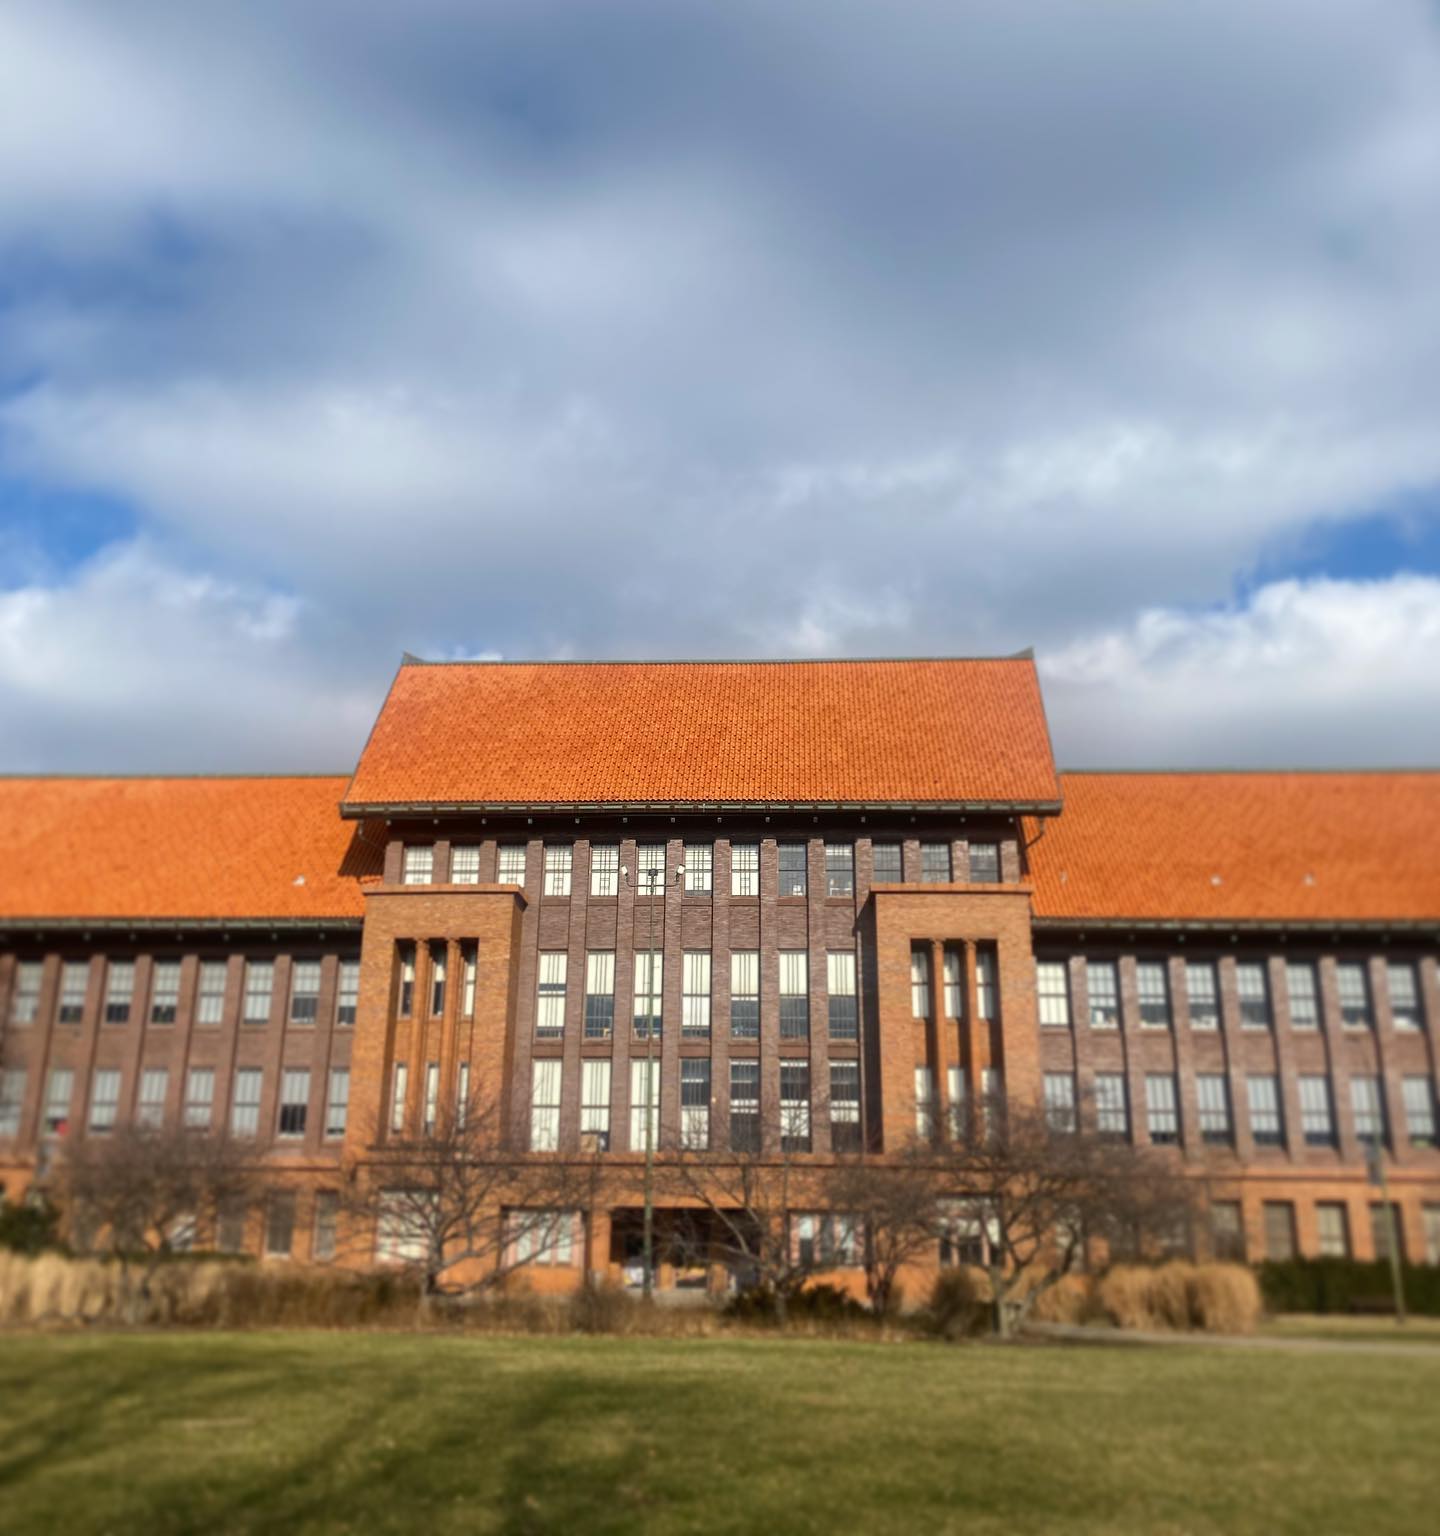 Sunshine in January in Chicago! So monumental. #irvingpark #architecture #chitecture  #dwightperkins #schoolarchitecture #prairieschool #prairiestyle